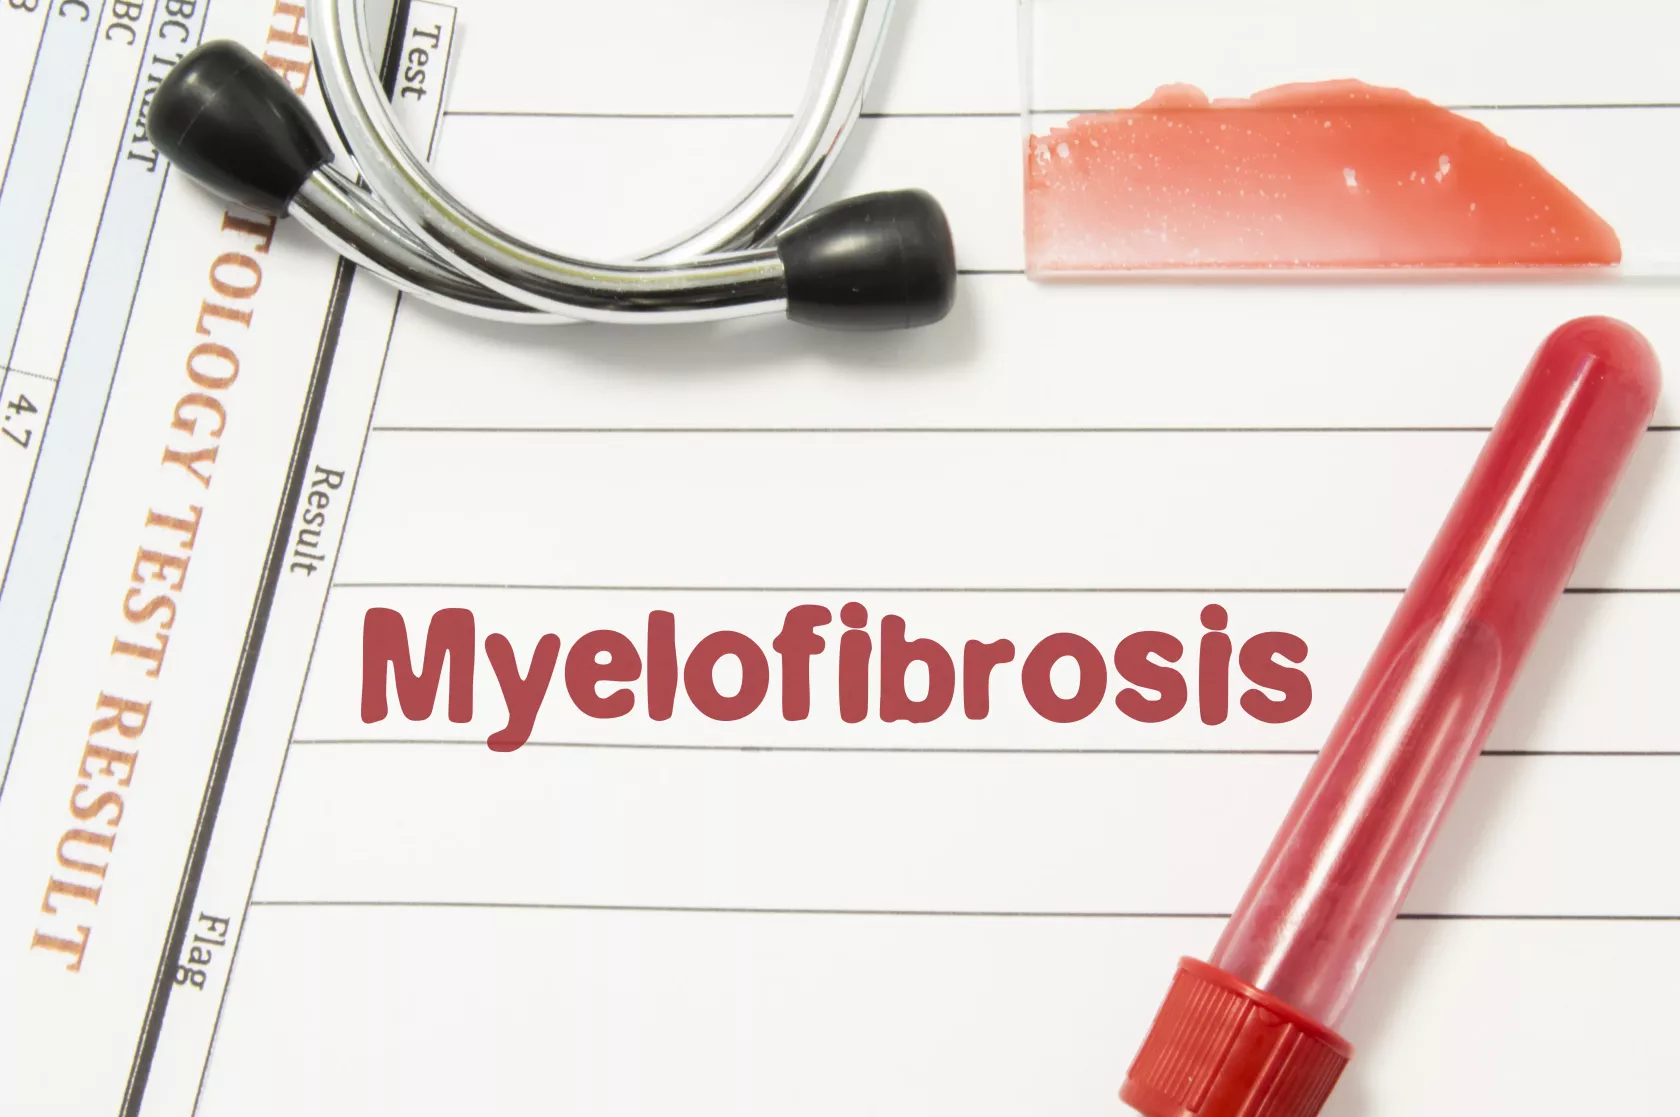 Myelofibrose-Diagnostik